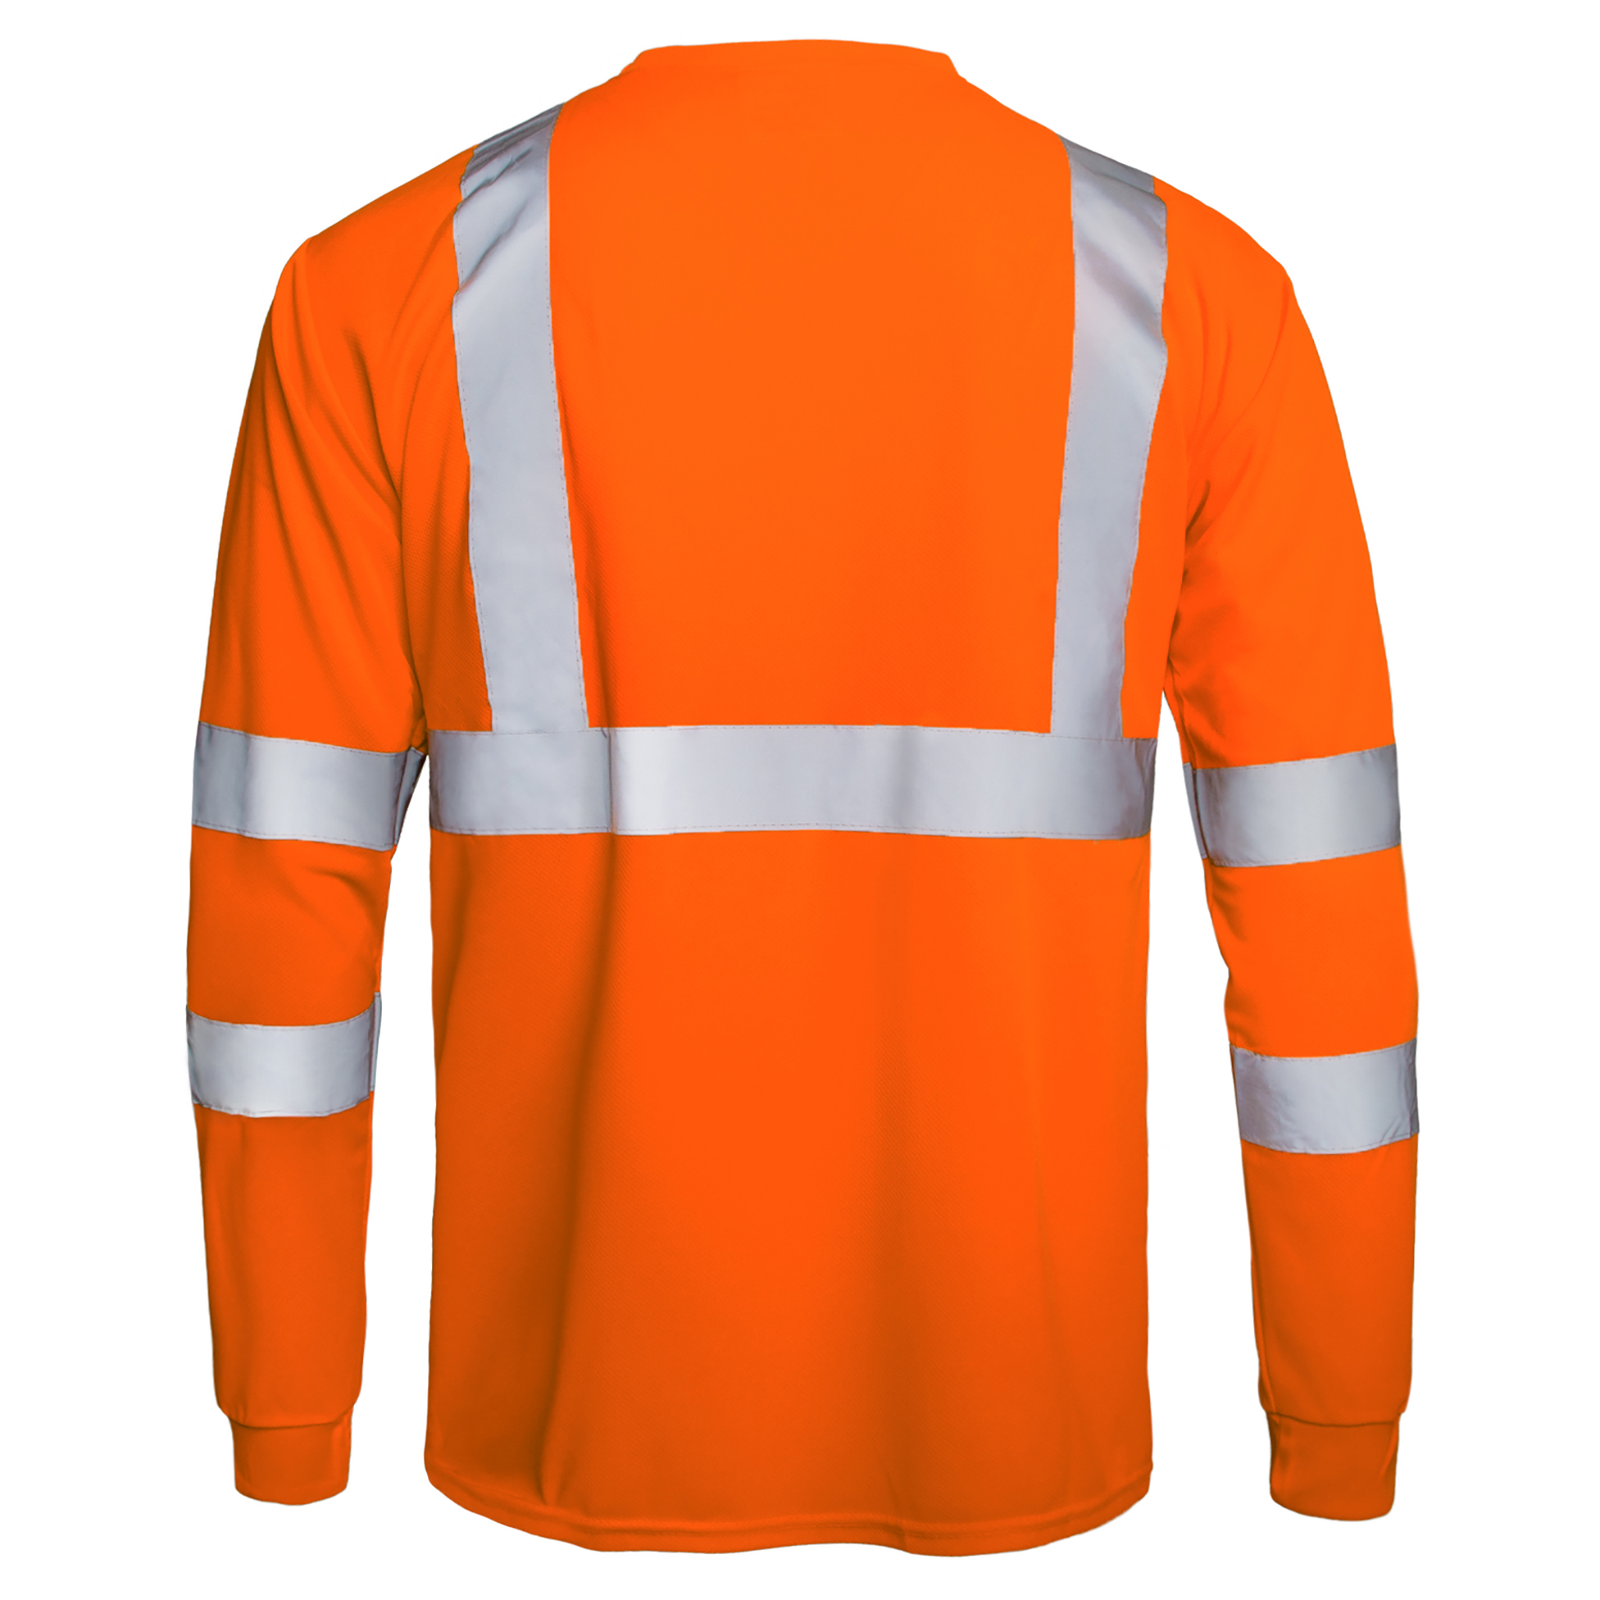 Back of the orange hi-vis reflective safety long sleeve shirt ANSI class 3 type R